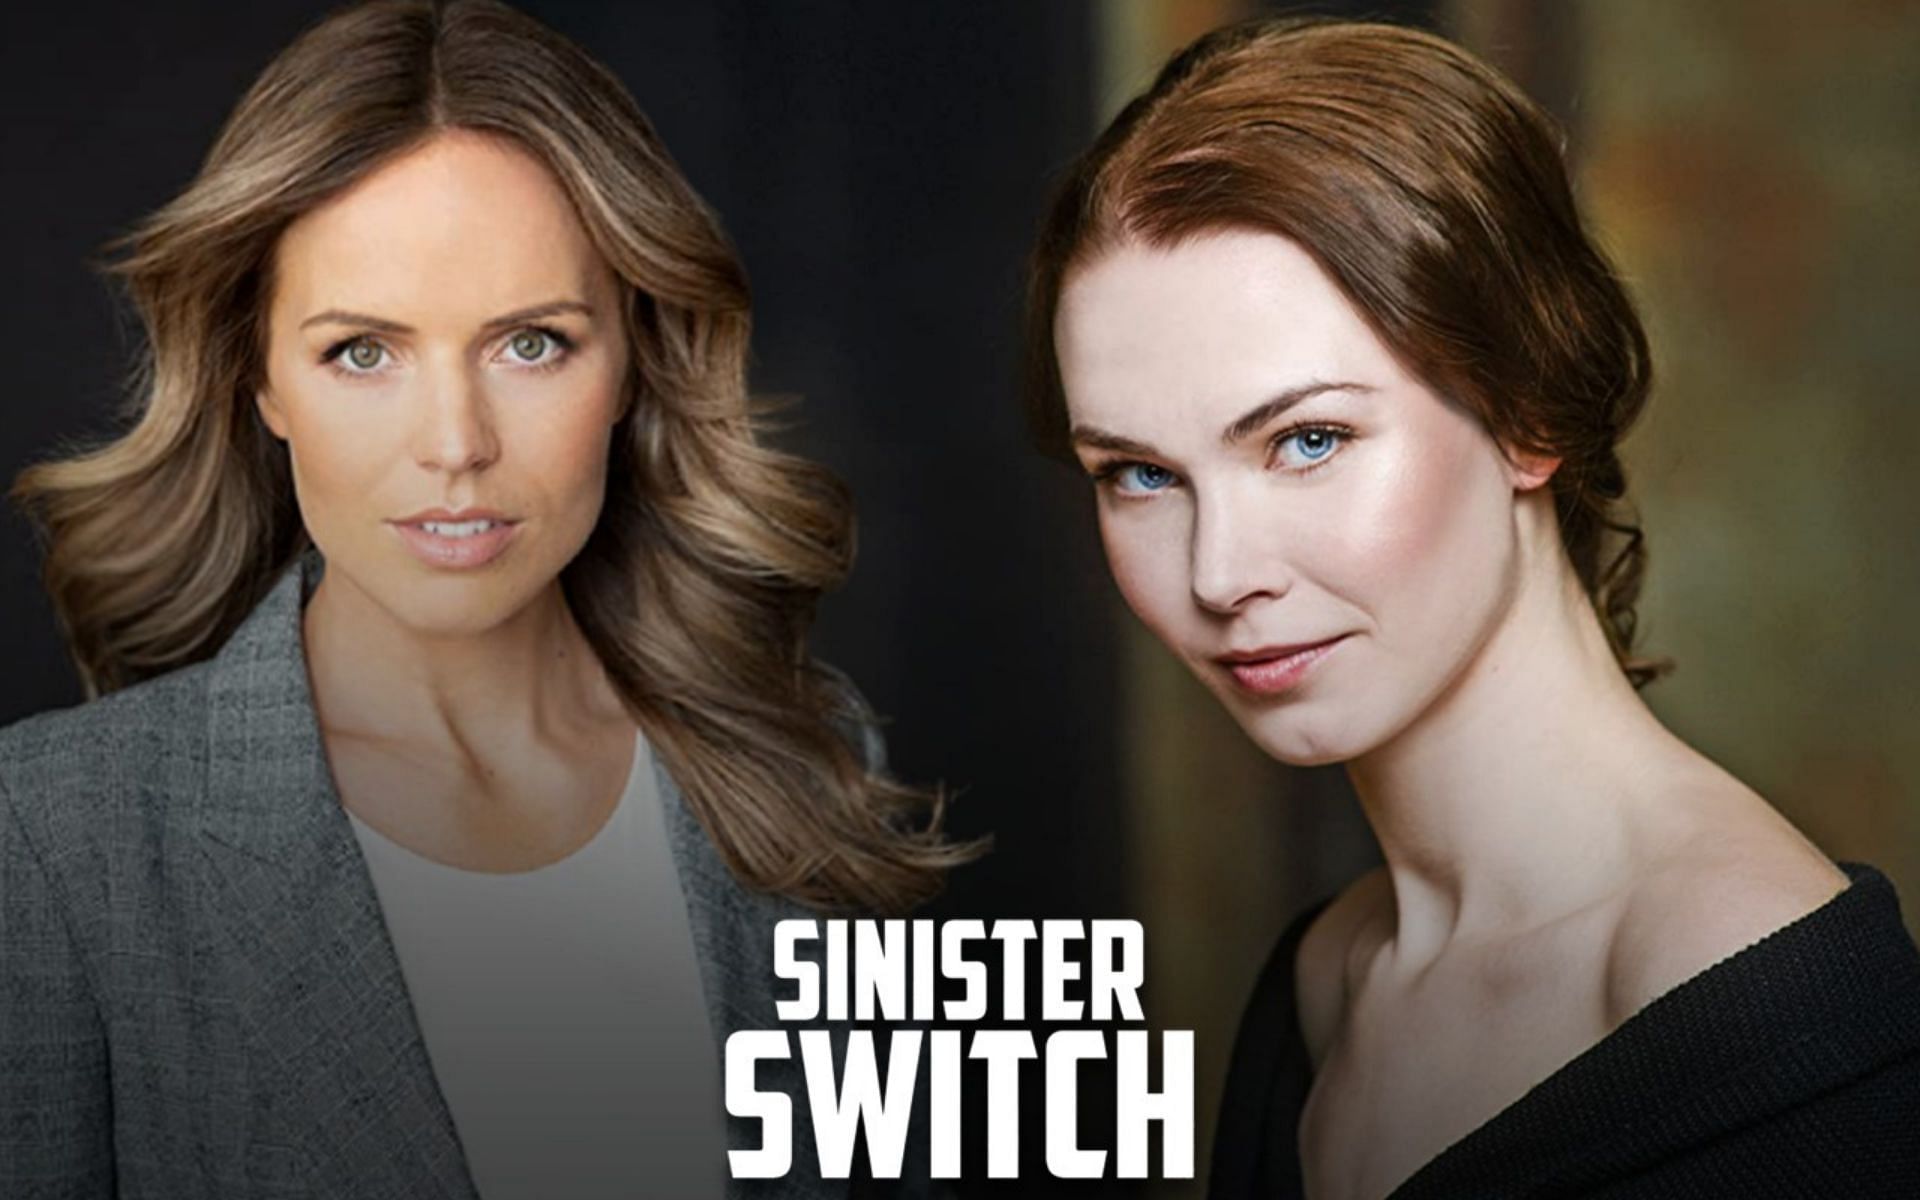 Meet the cast of &#039;Sinister Switch&#039; (Image via Sportskeeda)